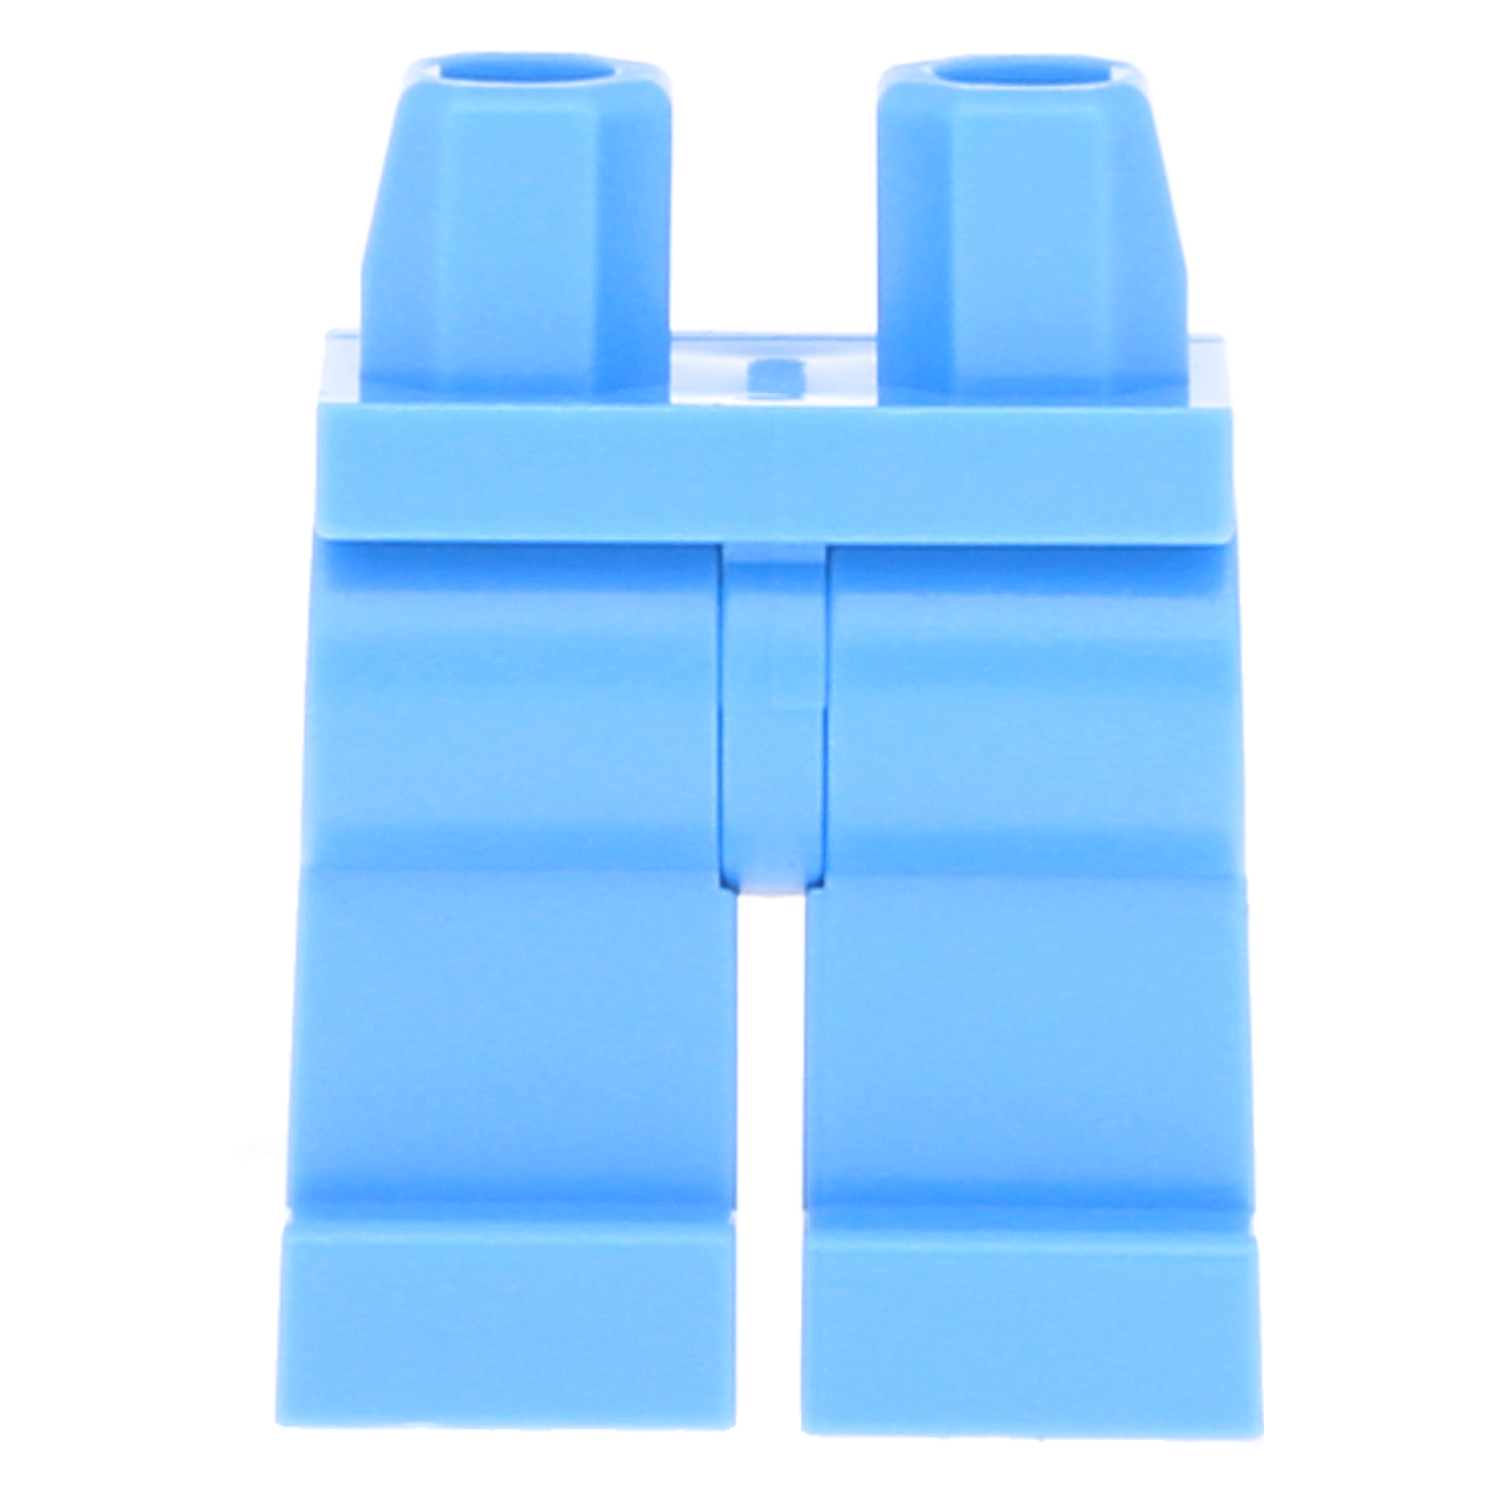 LEGO Minifigures Legs & Skirts - Legs plane